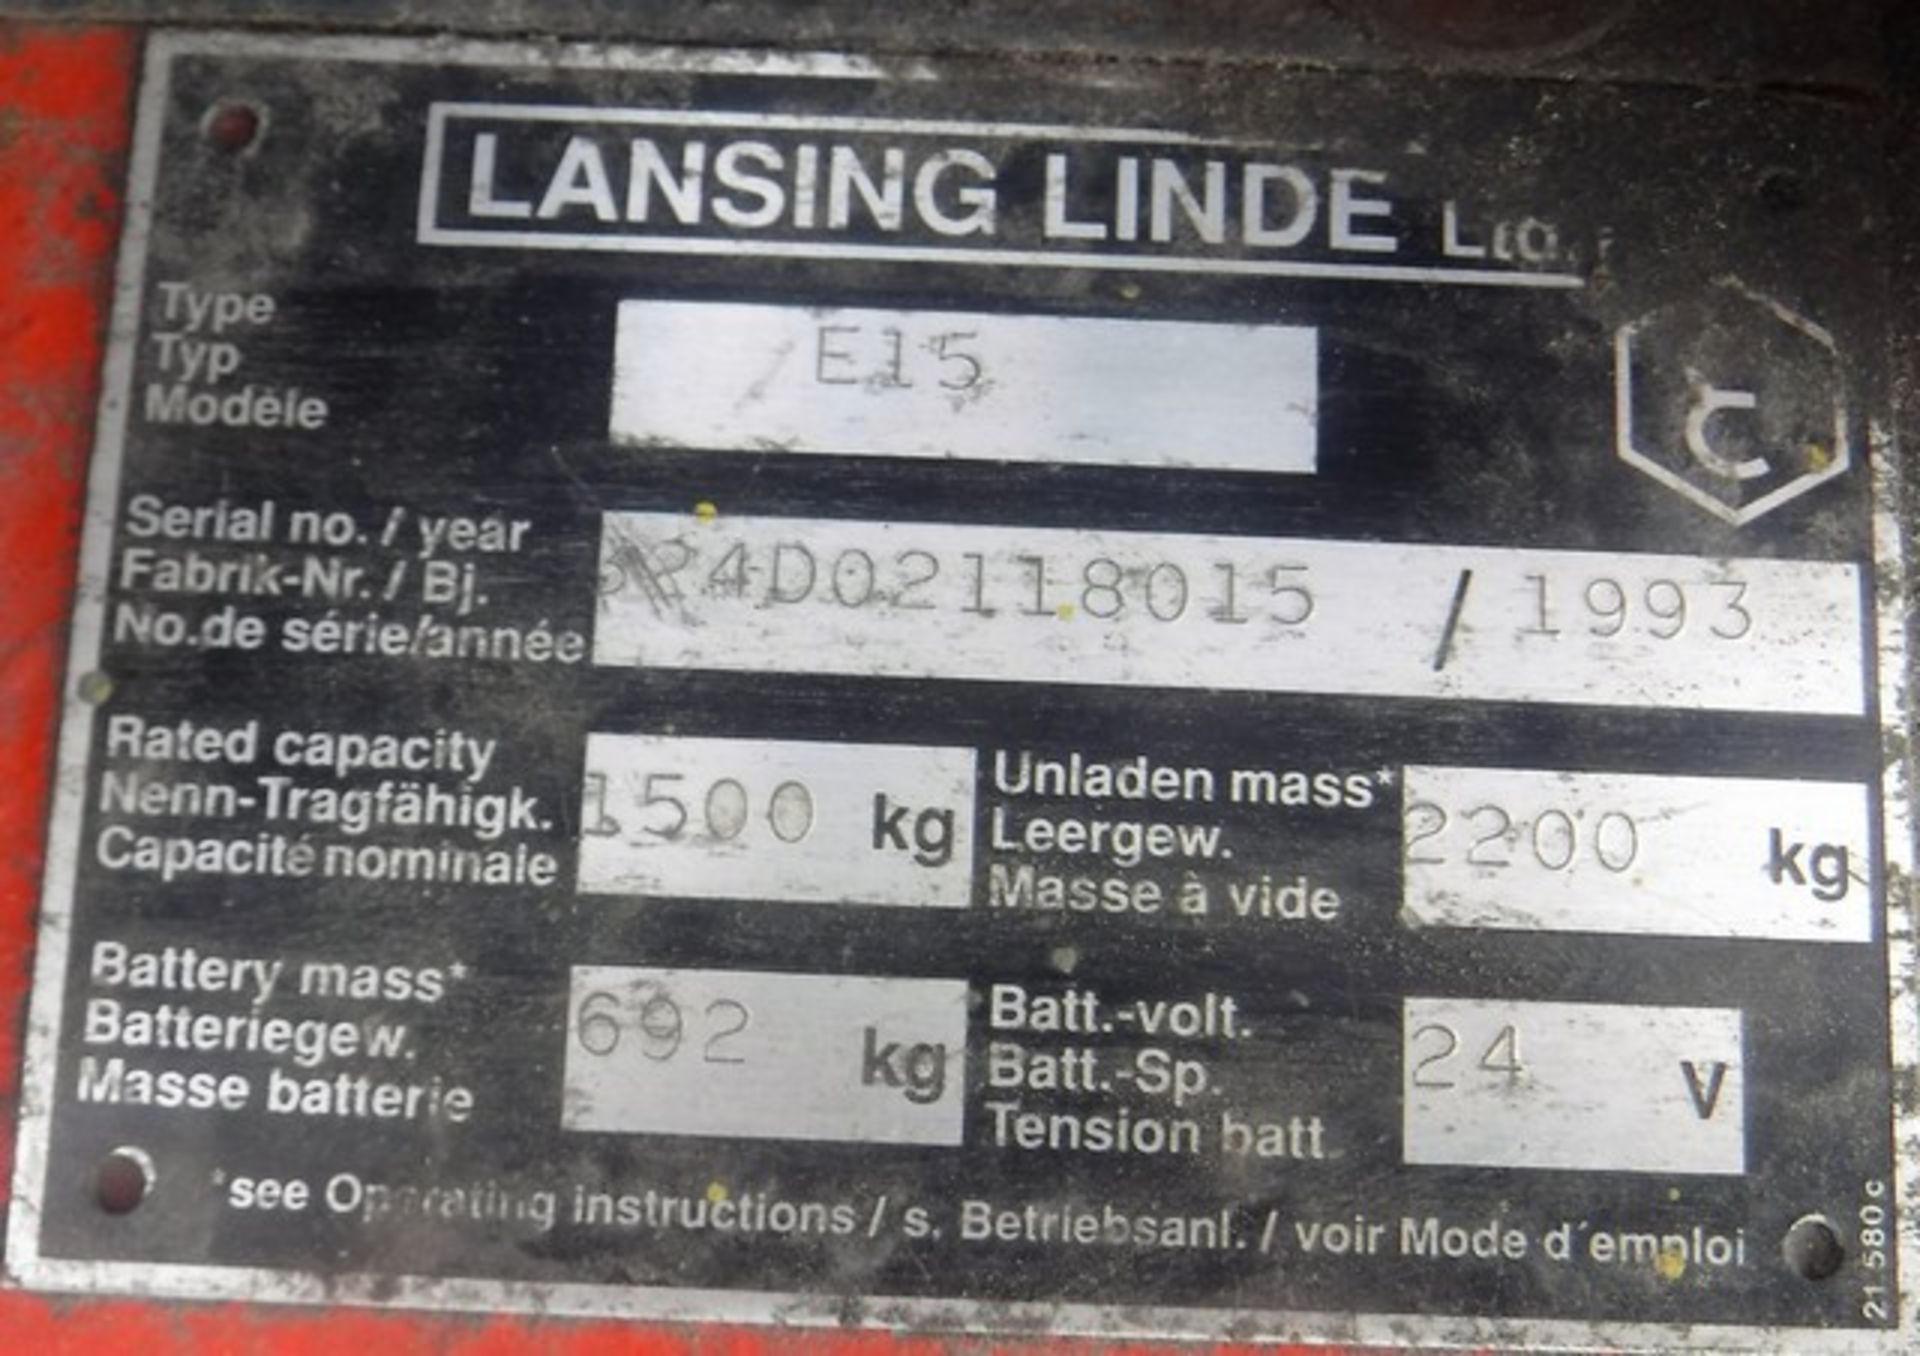 1993 LANSING LINDE E15 1.5 electric forklift (24v). S/N 324D02118015. 455hrs (not verified). C/W chl - Bild 2 aus 15